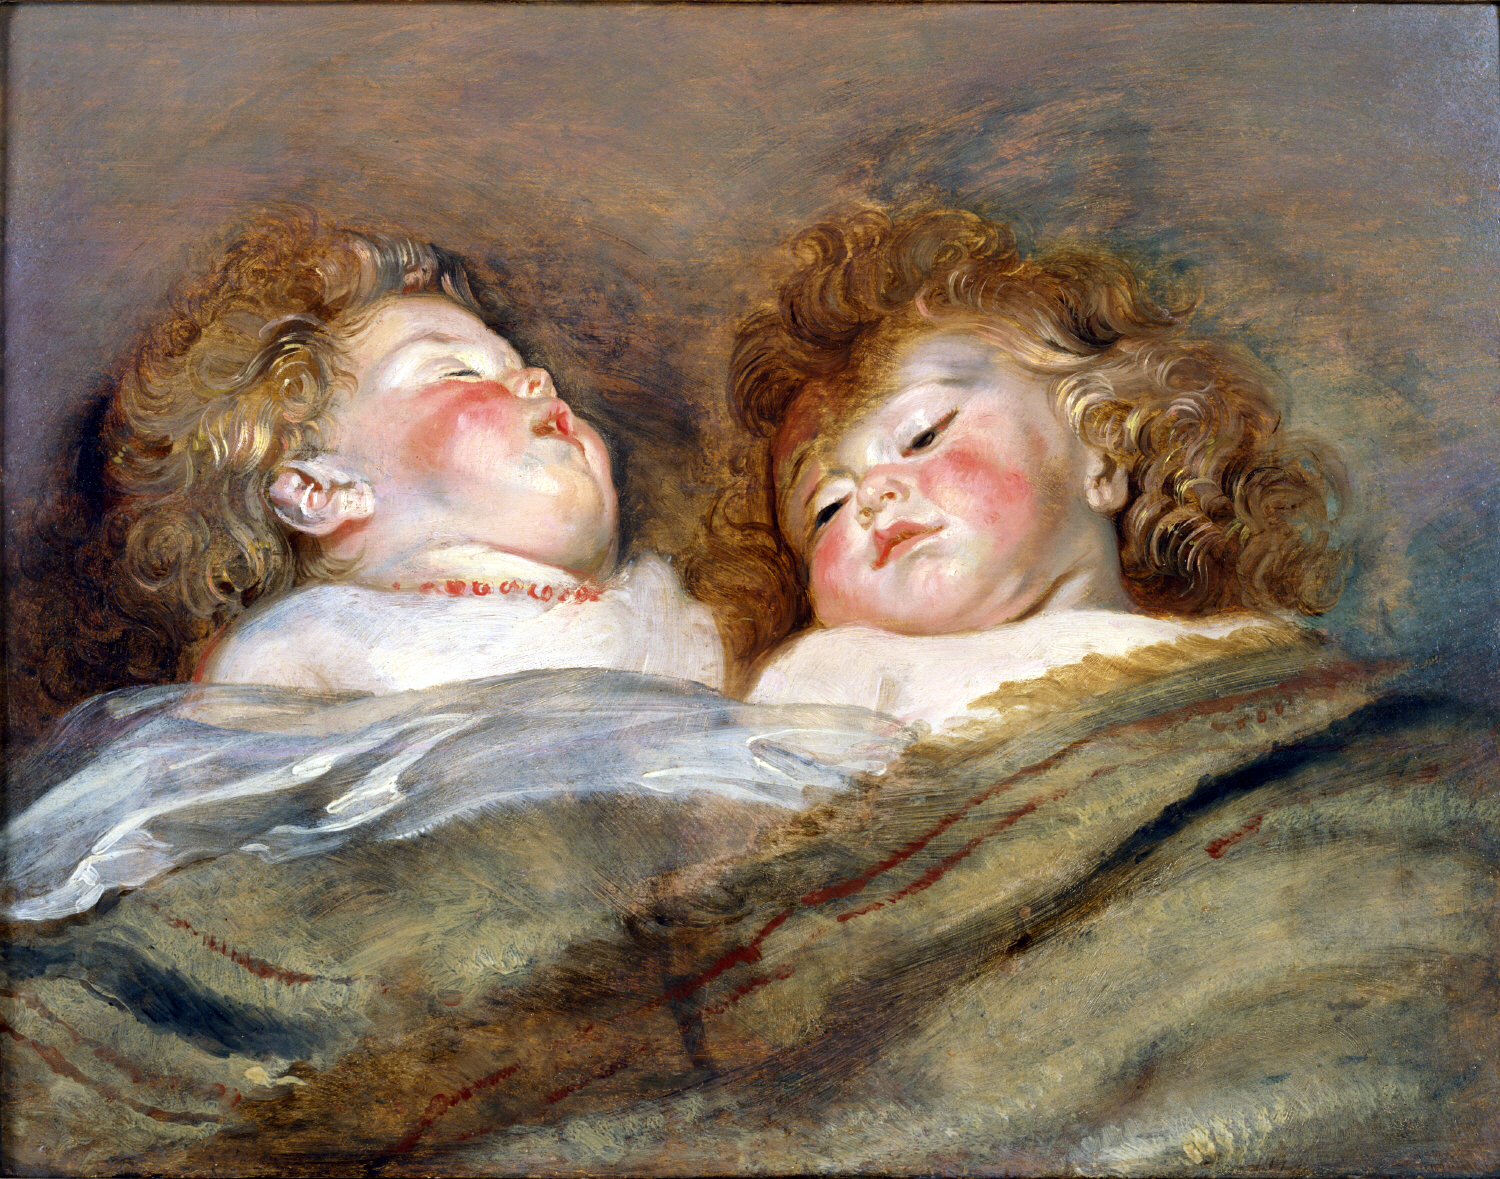 Two Sleeping Children by Peter Paul Rubens - c. 1612-13 - 50,5 x 65,5 cm The National Museum of Western Art, Tokyo